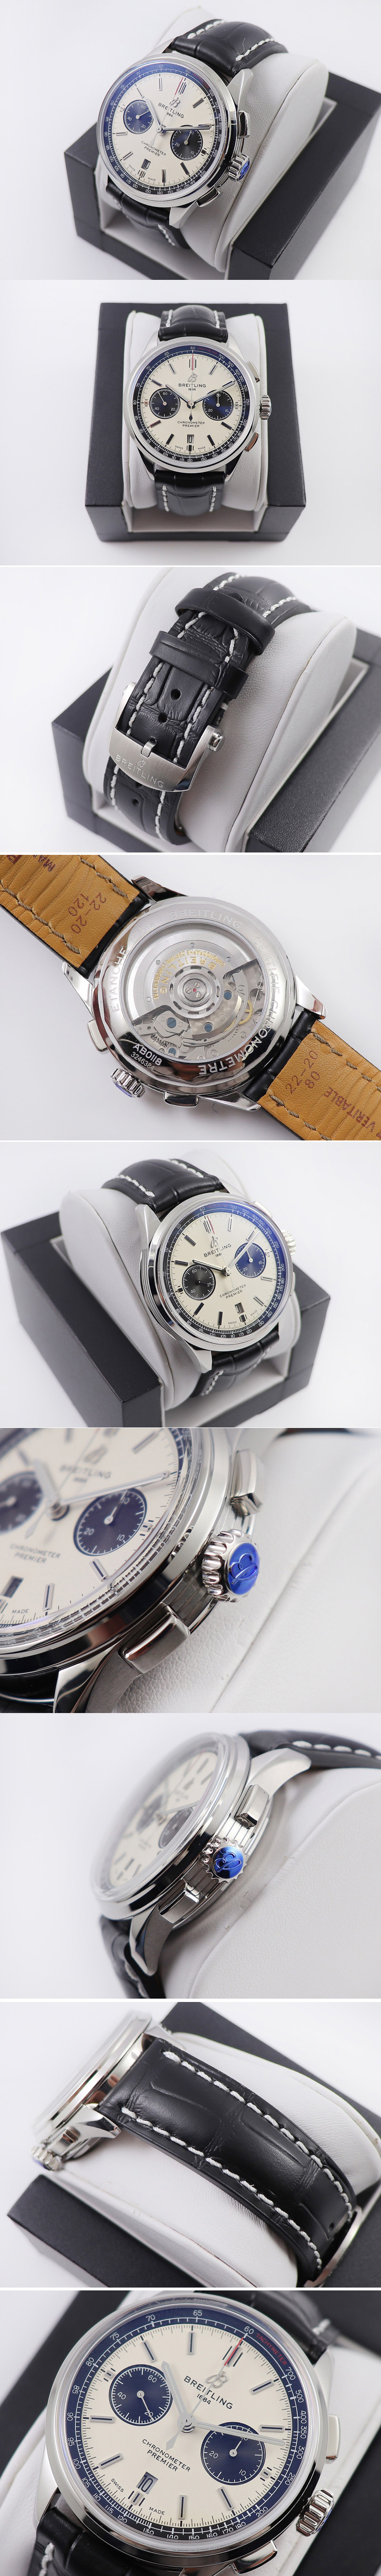 Replica Premier B01 Chronograph  Watches